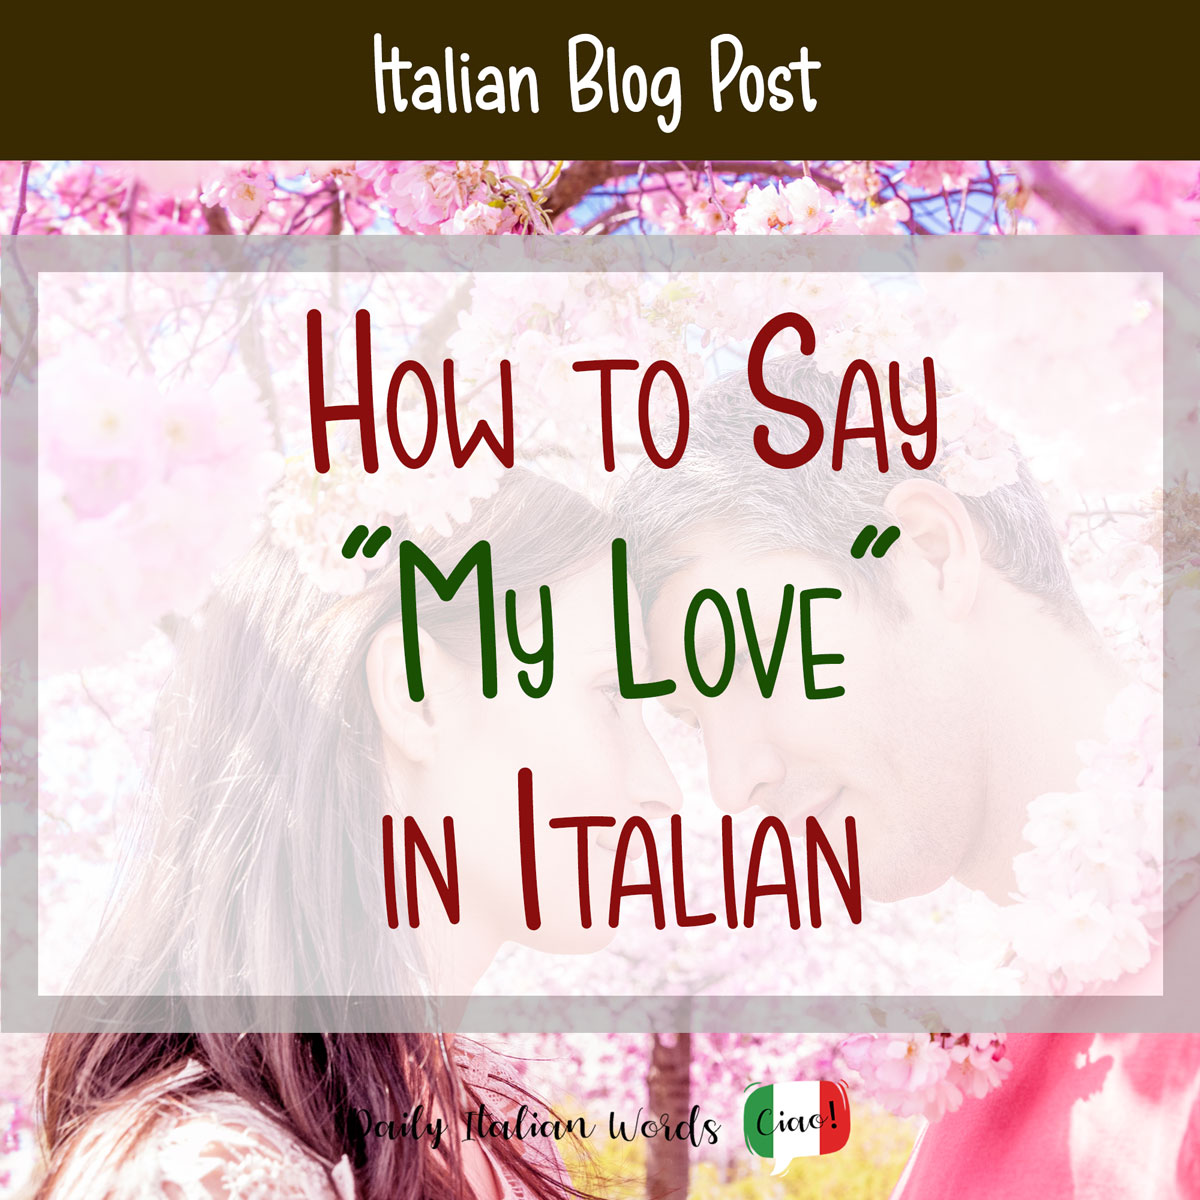 Tips on how to Say “My Love” in Italian – “Il mio amore” vs “Amore mio” vs “L’amore mio”